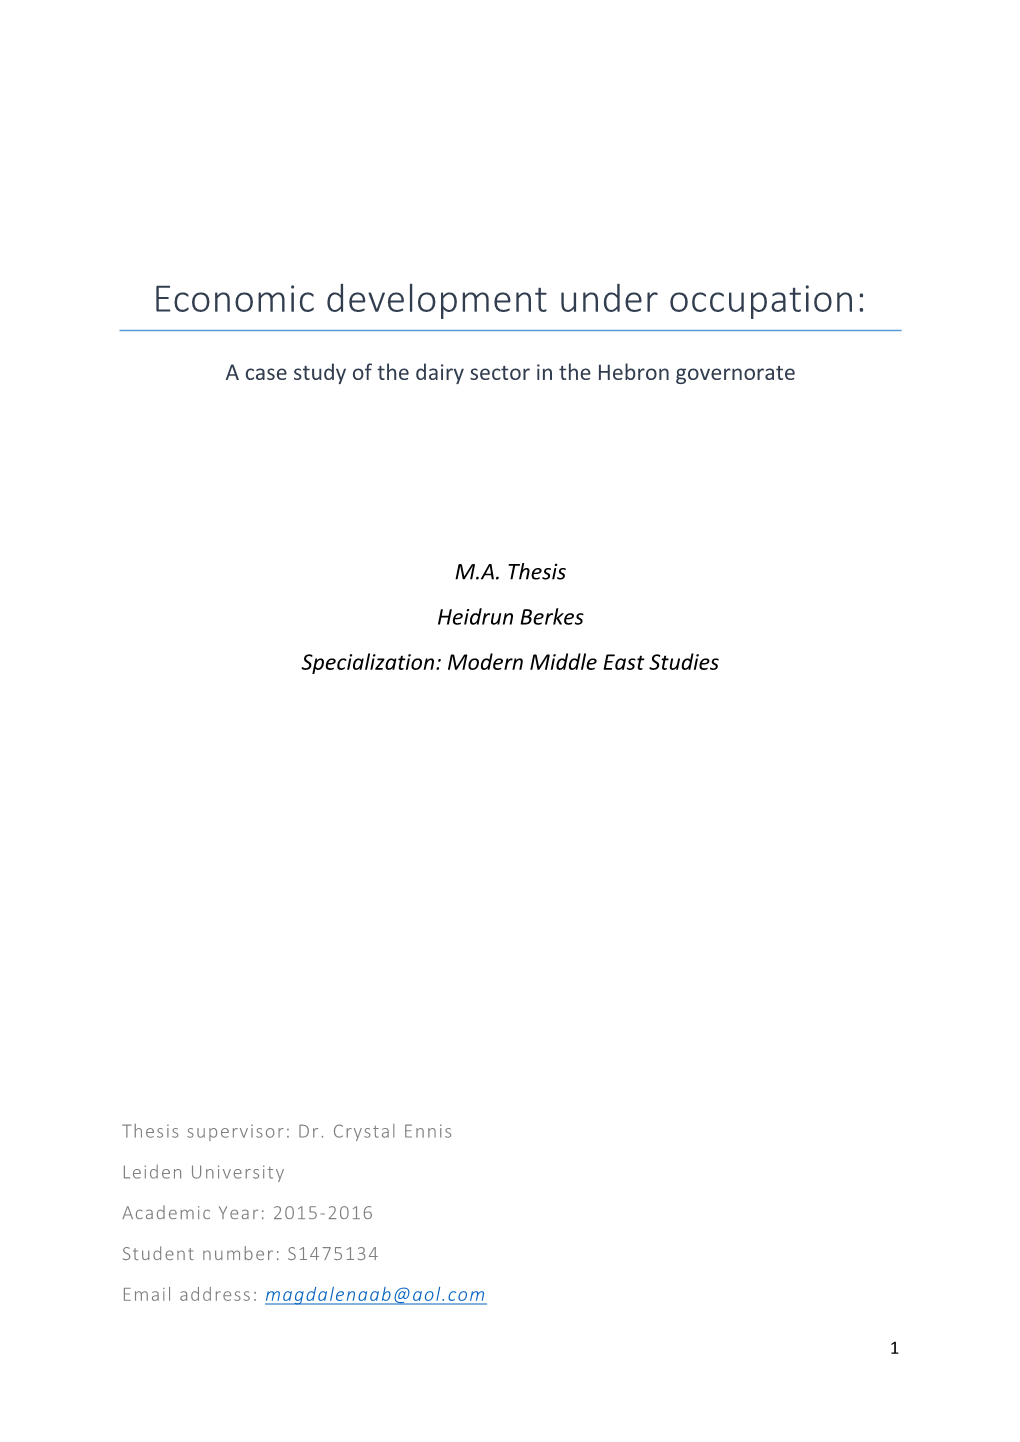 Economic Development Under Occupation